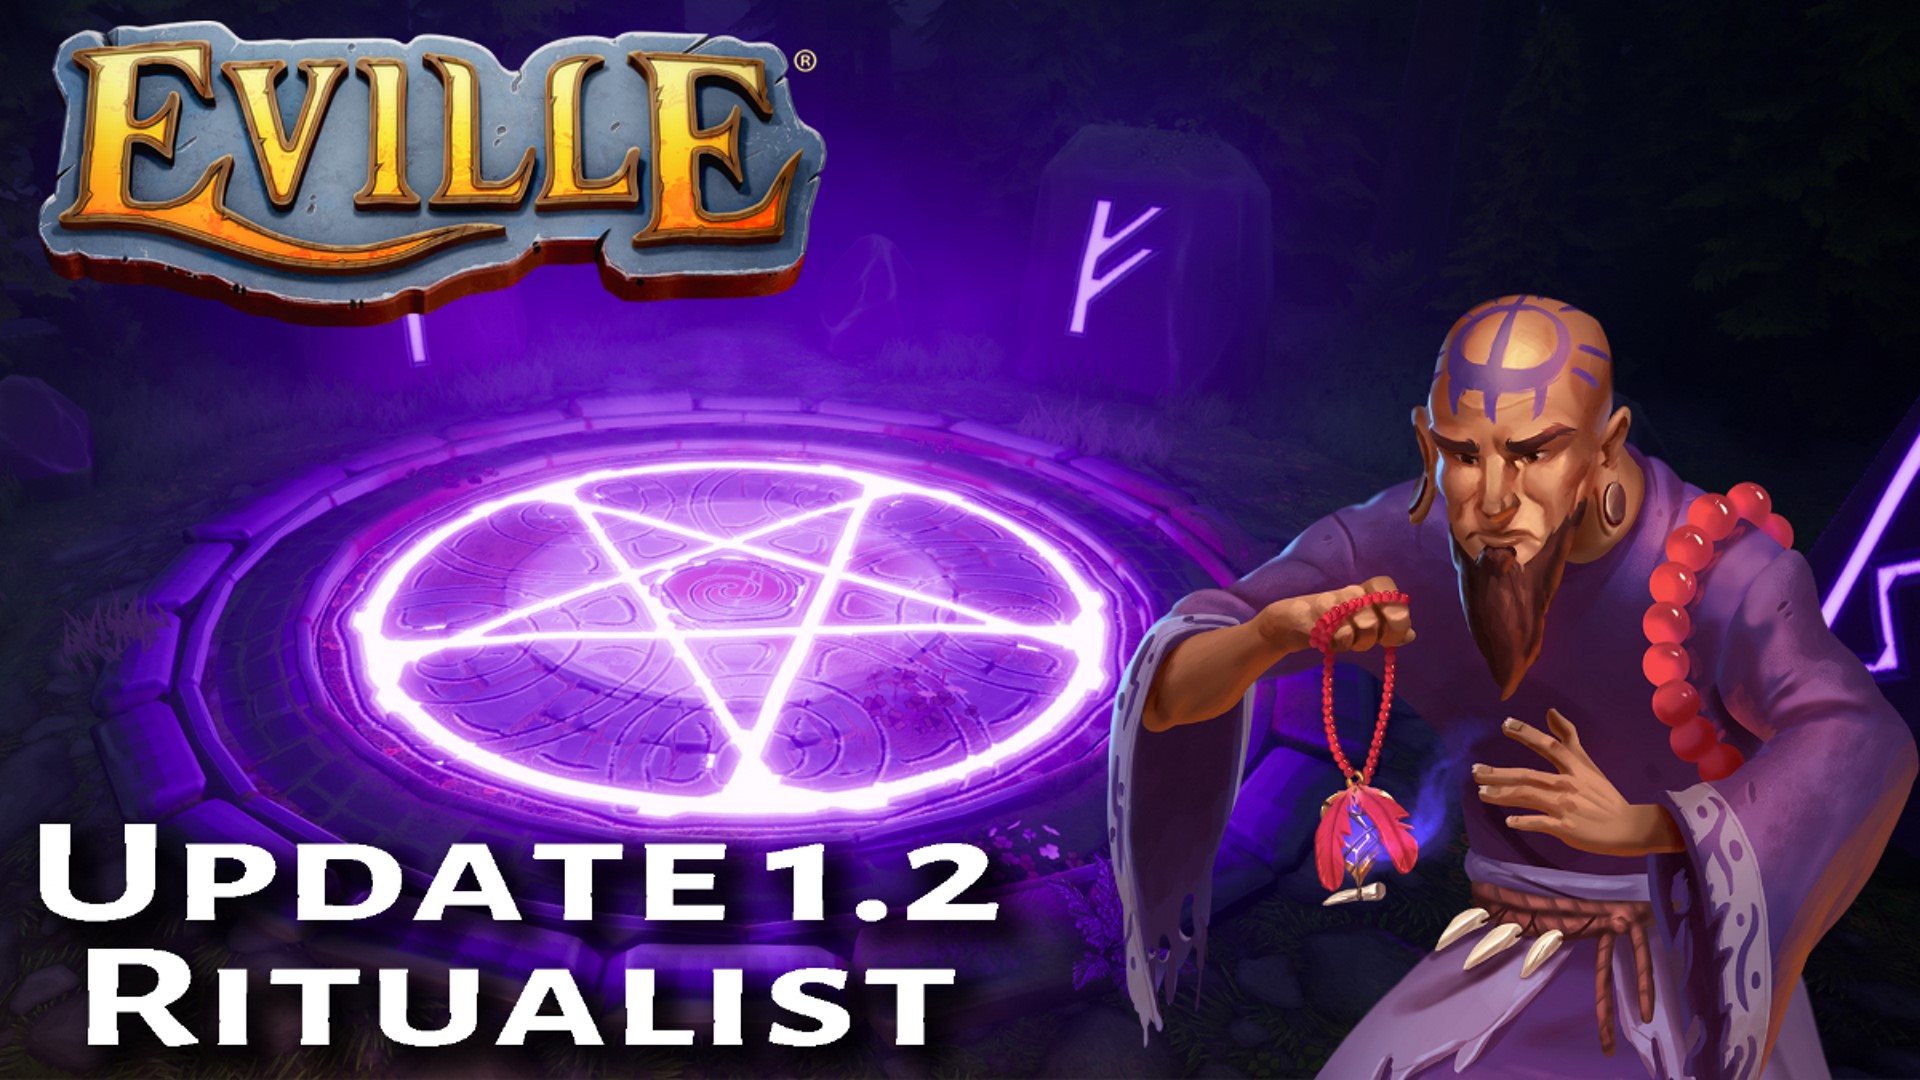 Eville: Update bringt Ritualist Rolle